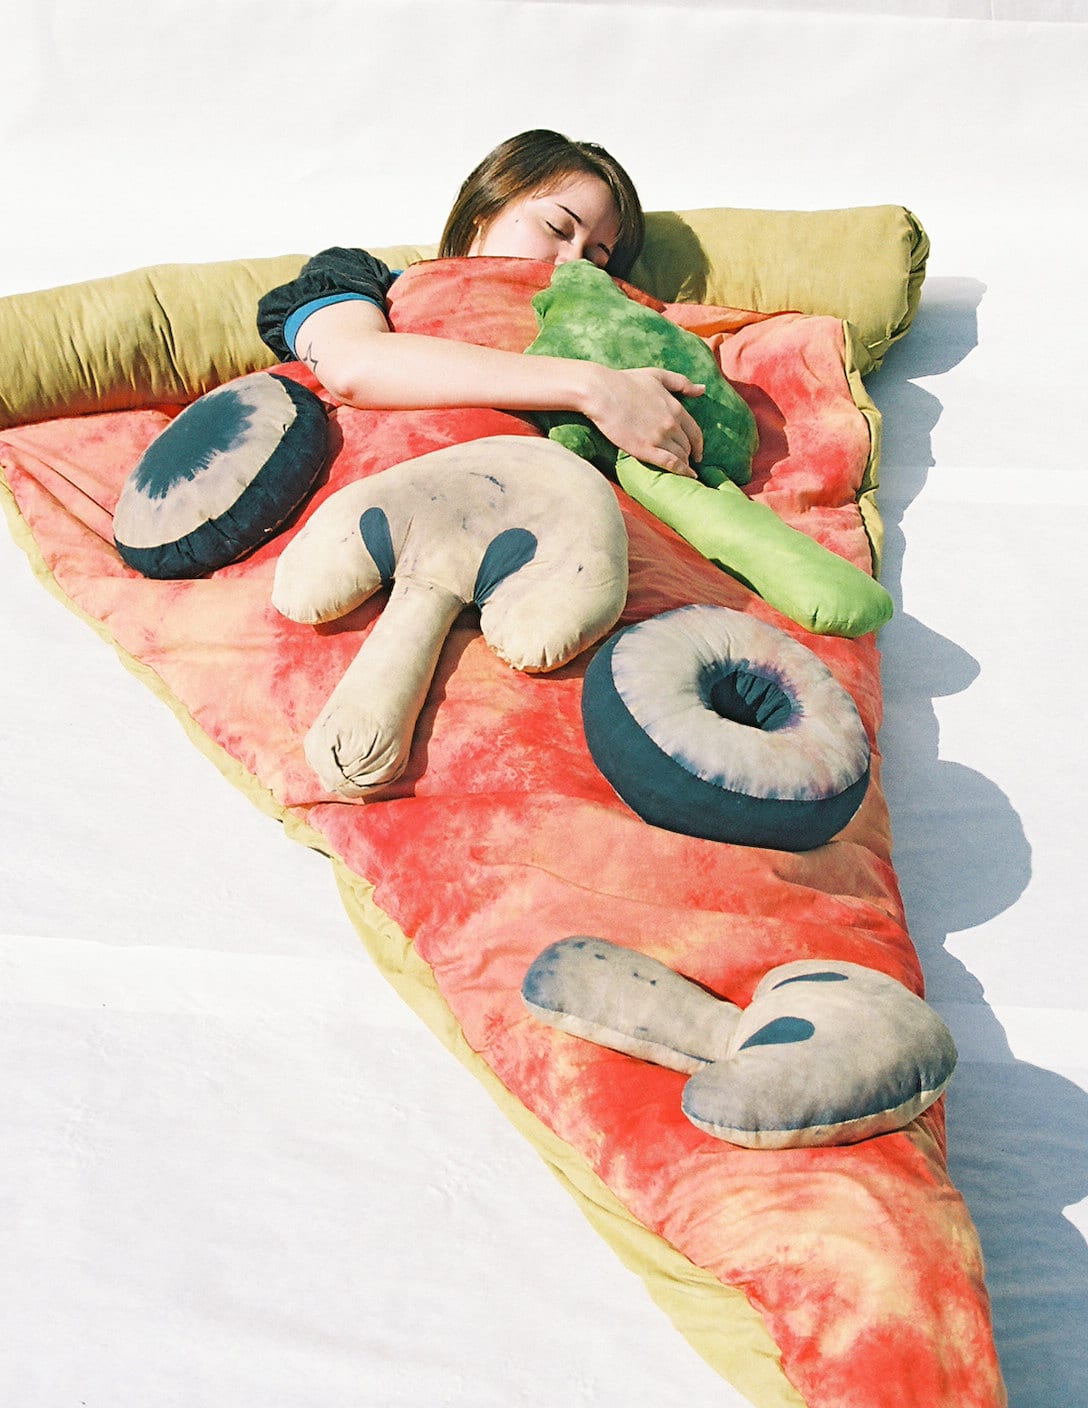 Pizza Slice Sleeping Bag Concept 